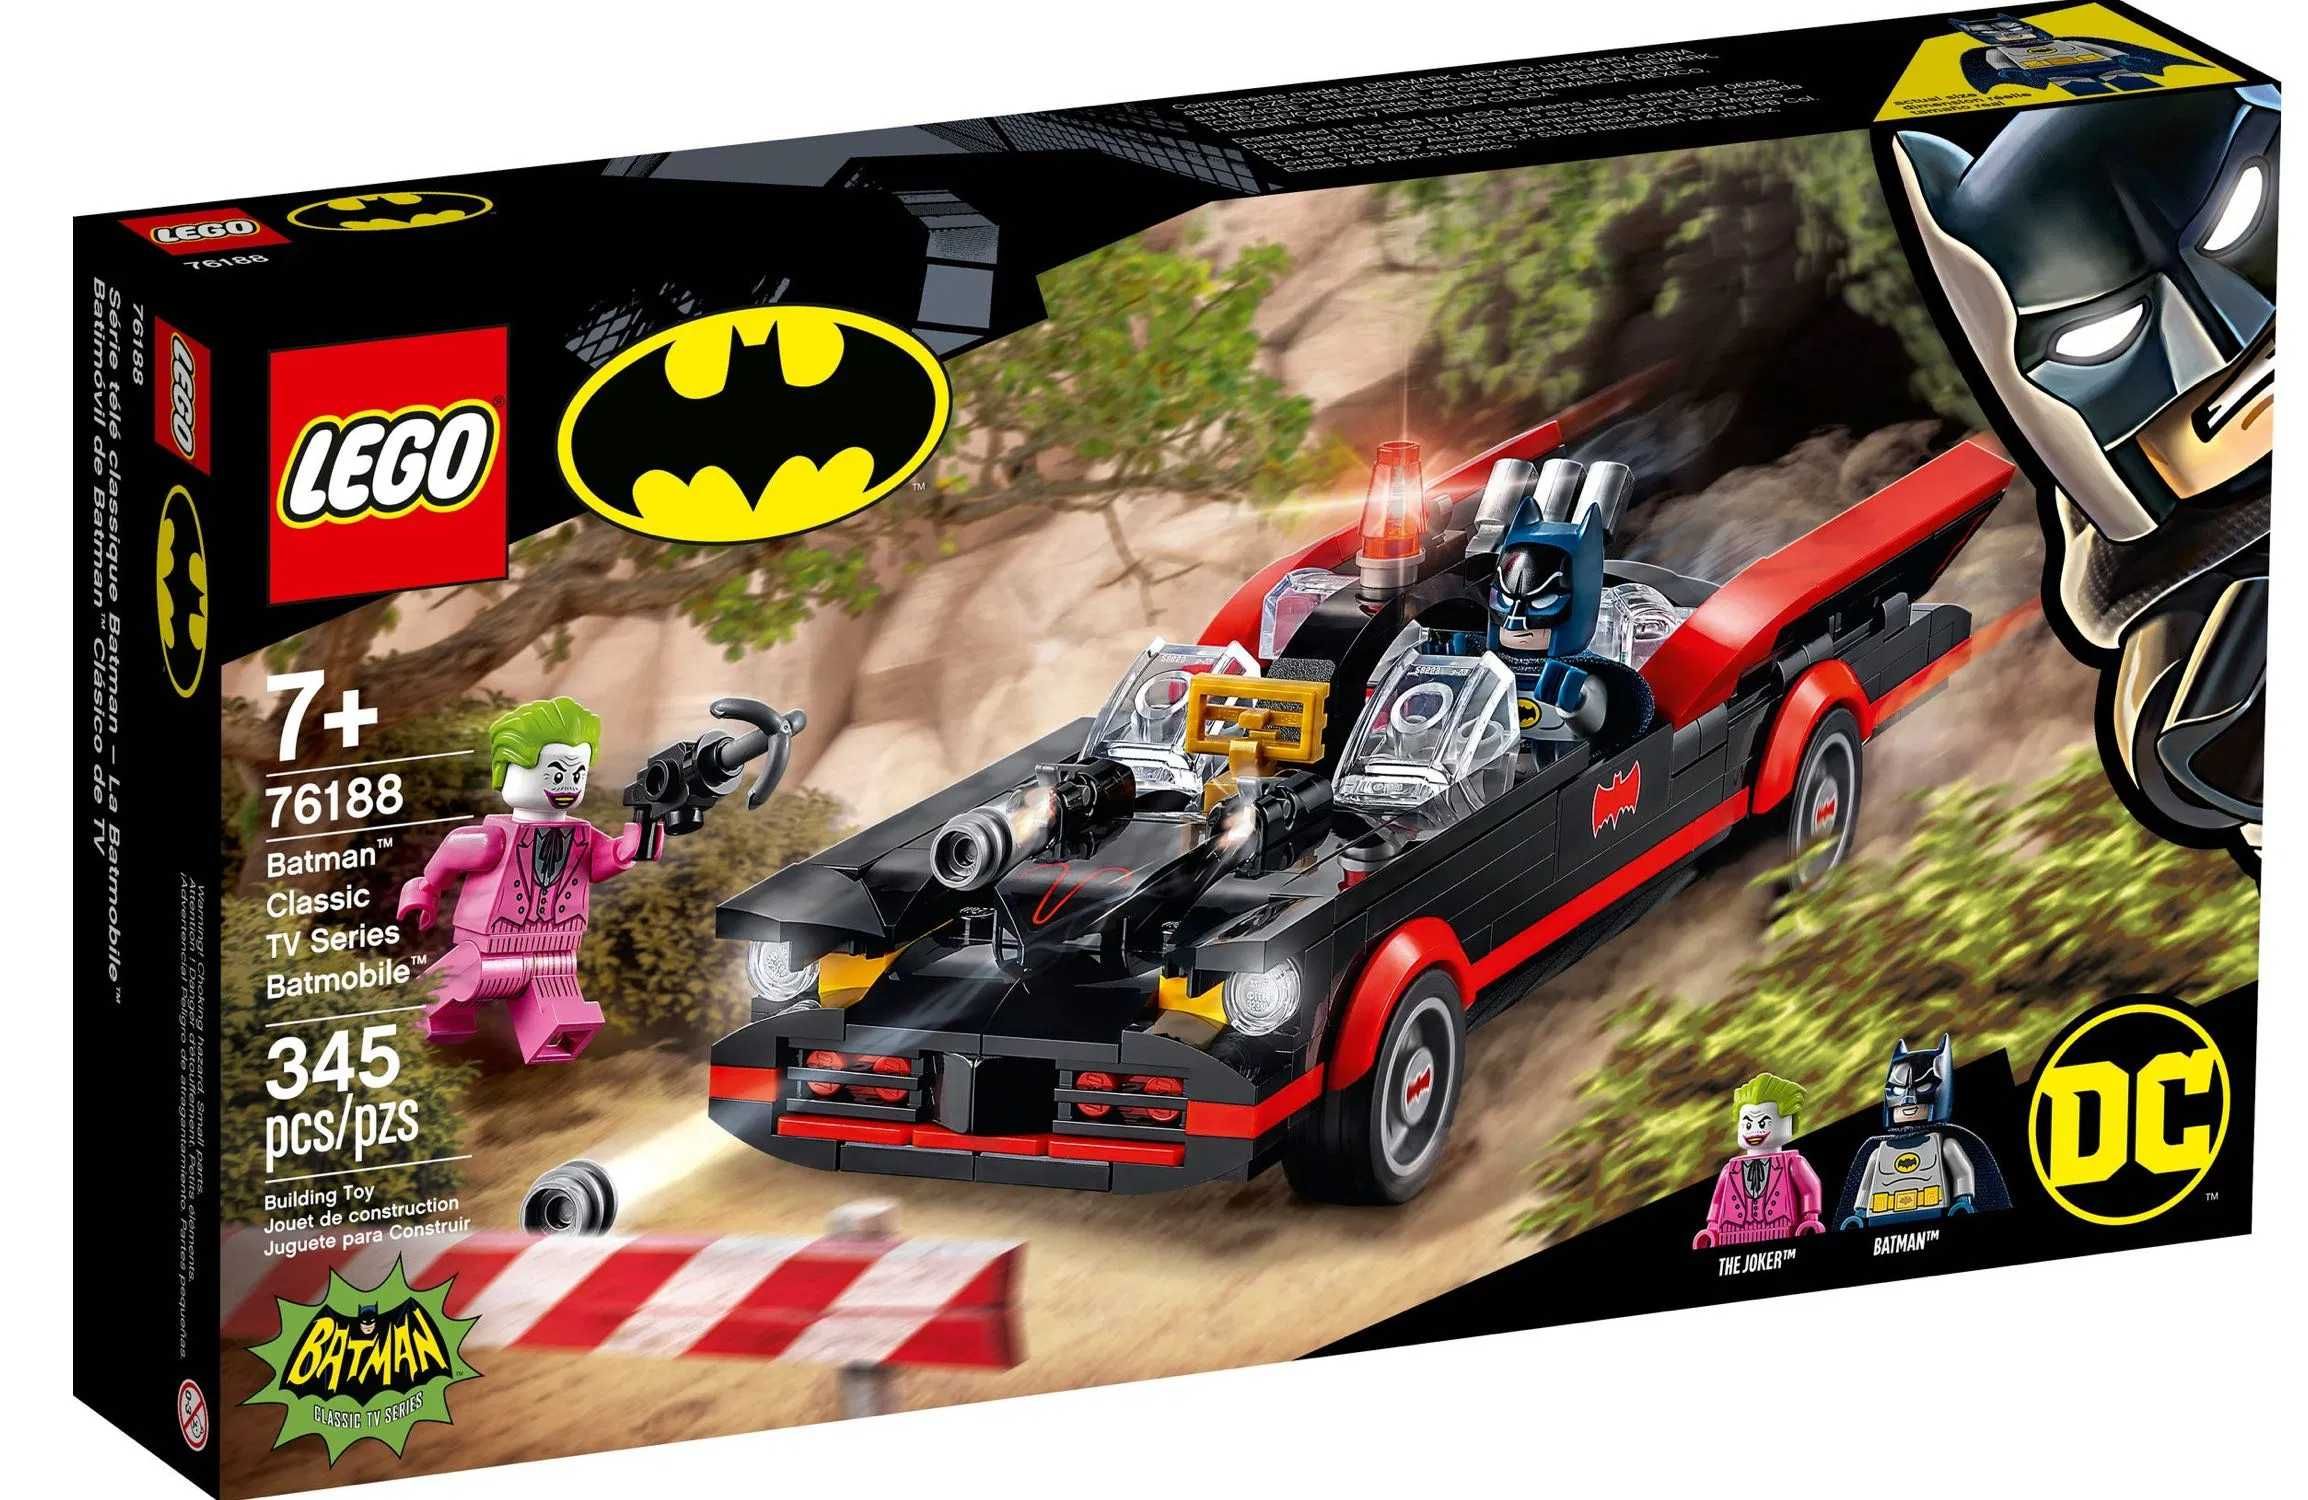 Lego Batman 76188 Batman Classic TV Series Batmobile